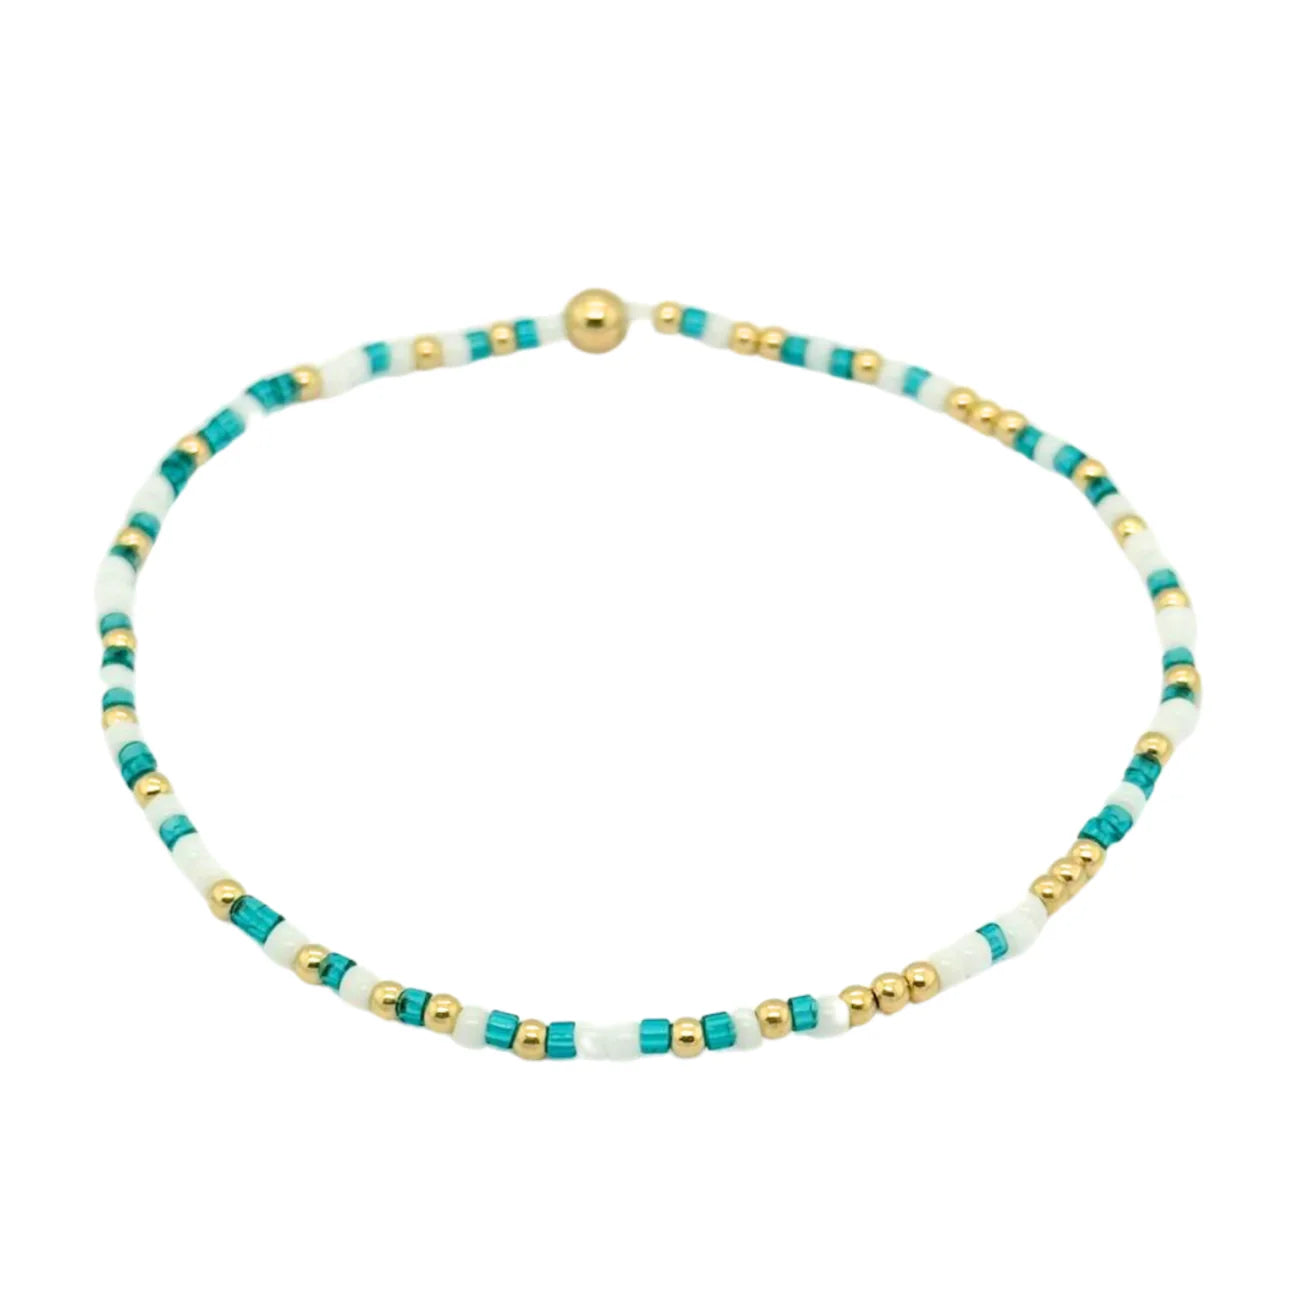 Colorful Beads Bracelets